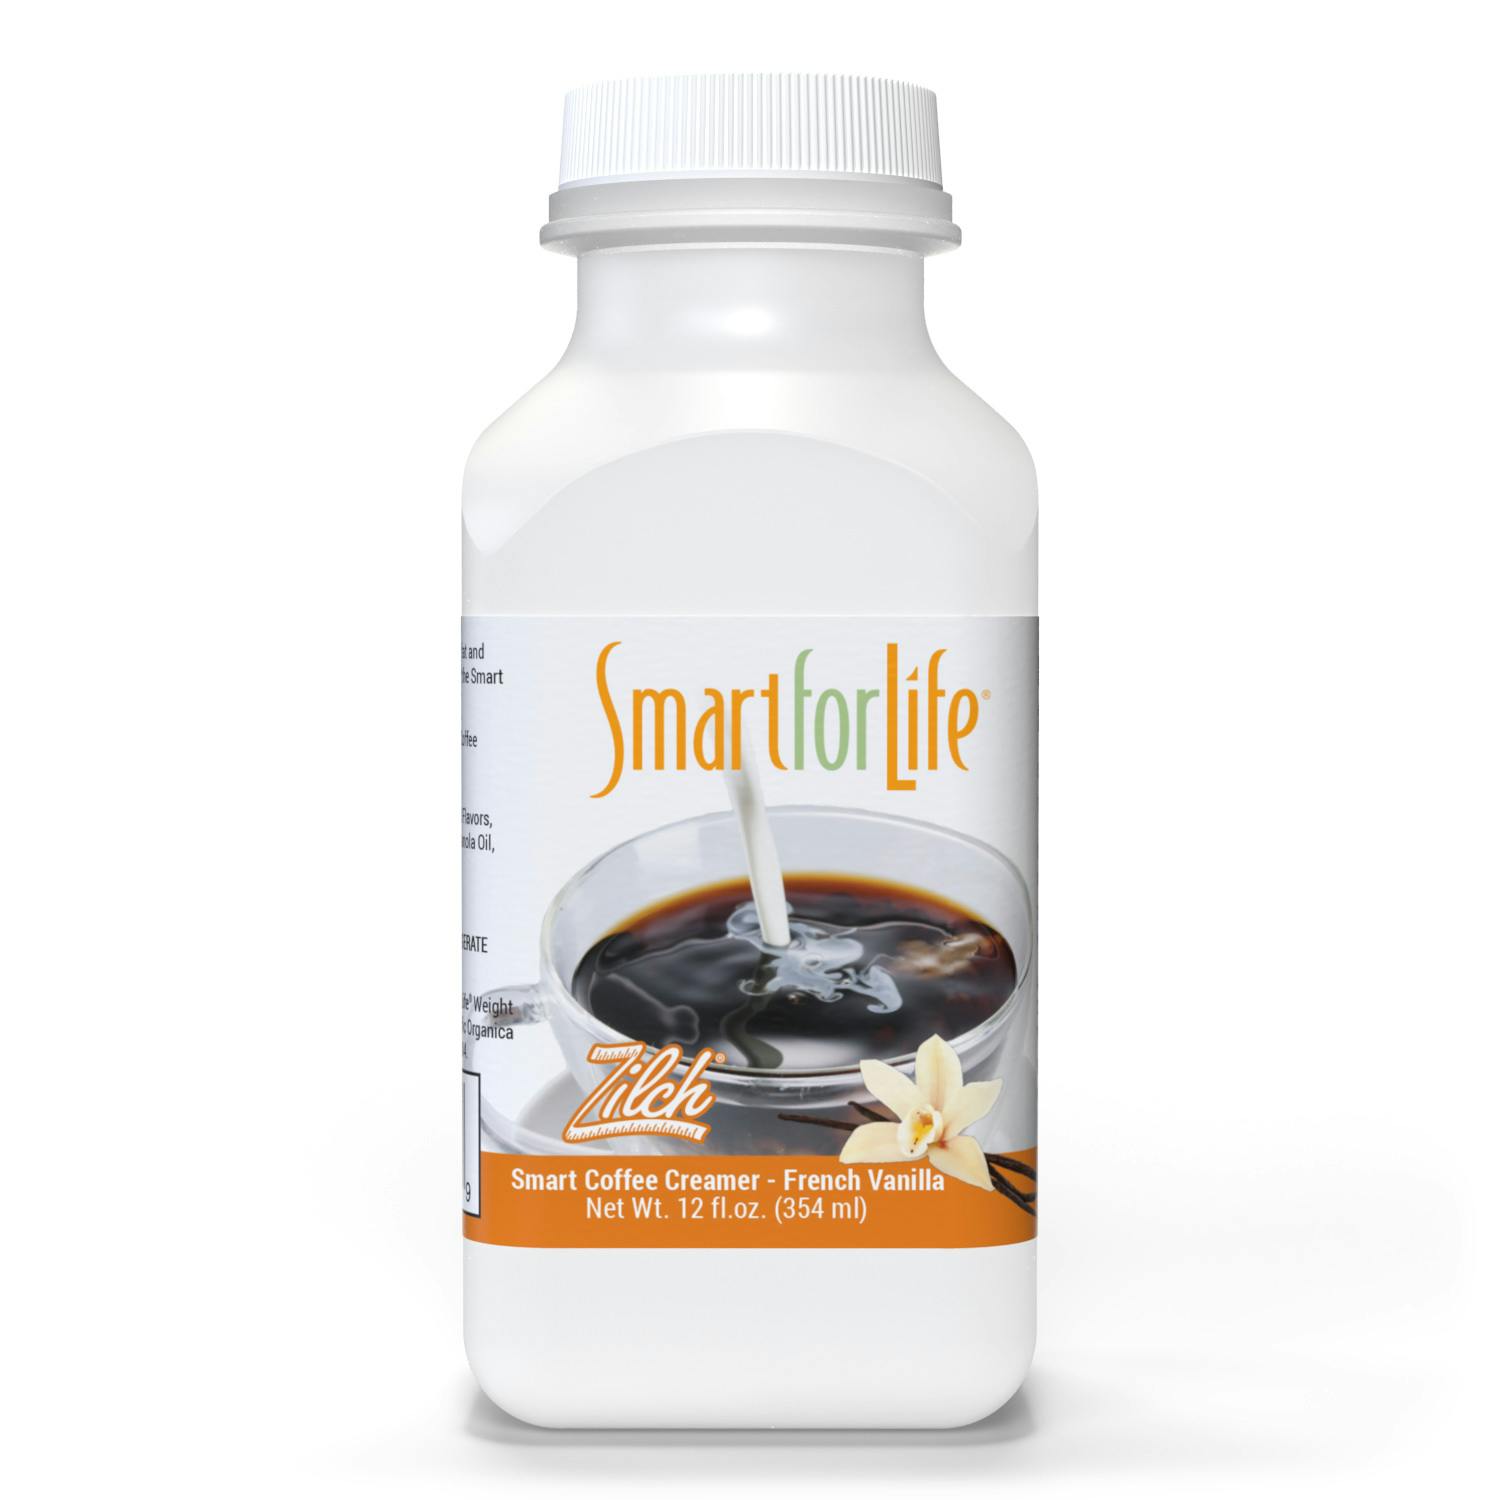 Smart for Life Zero Calorie Coffee Creamer